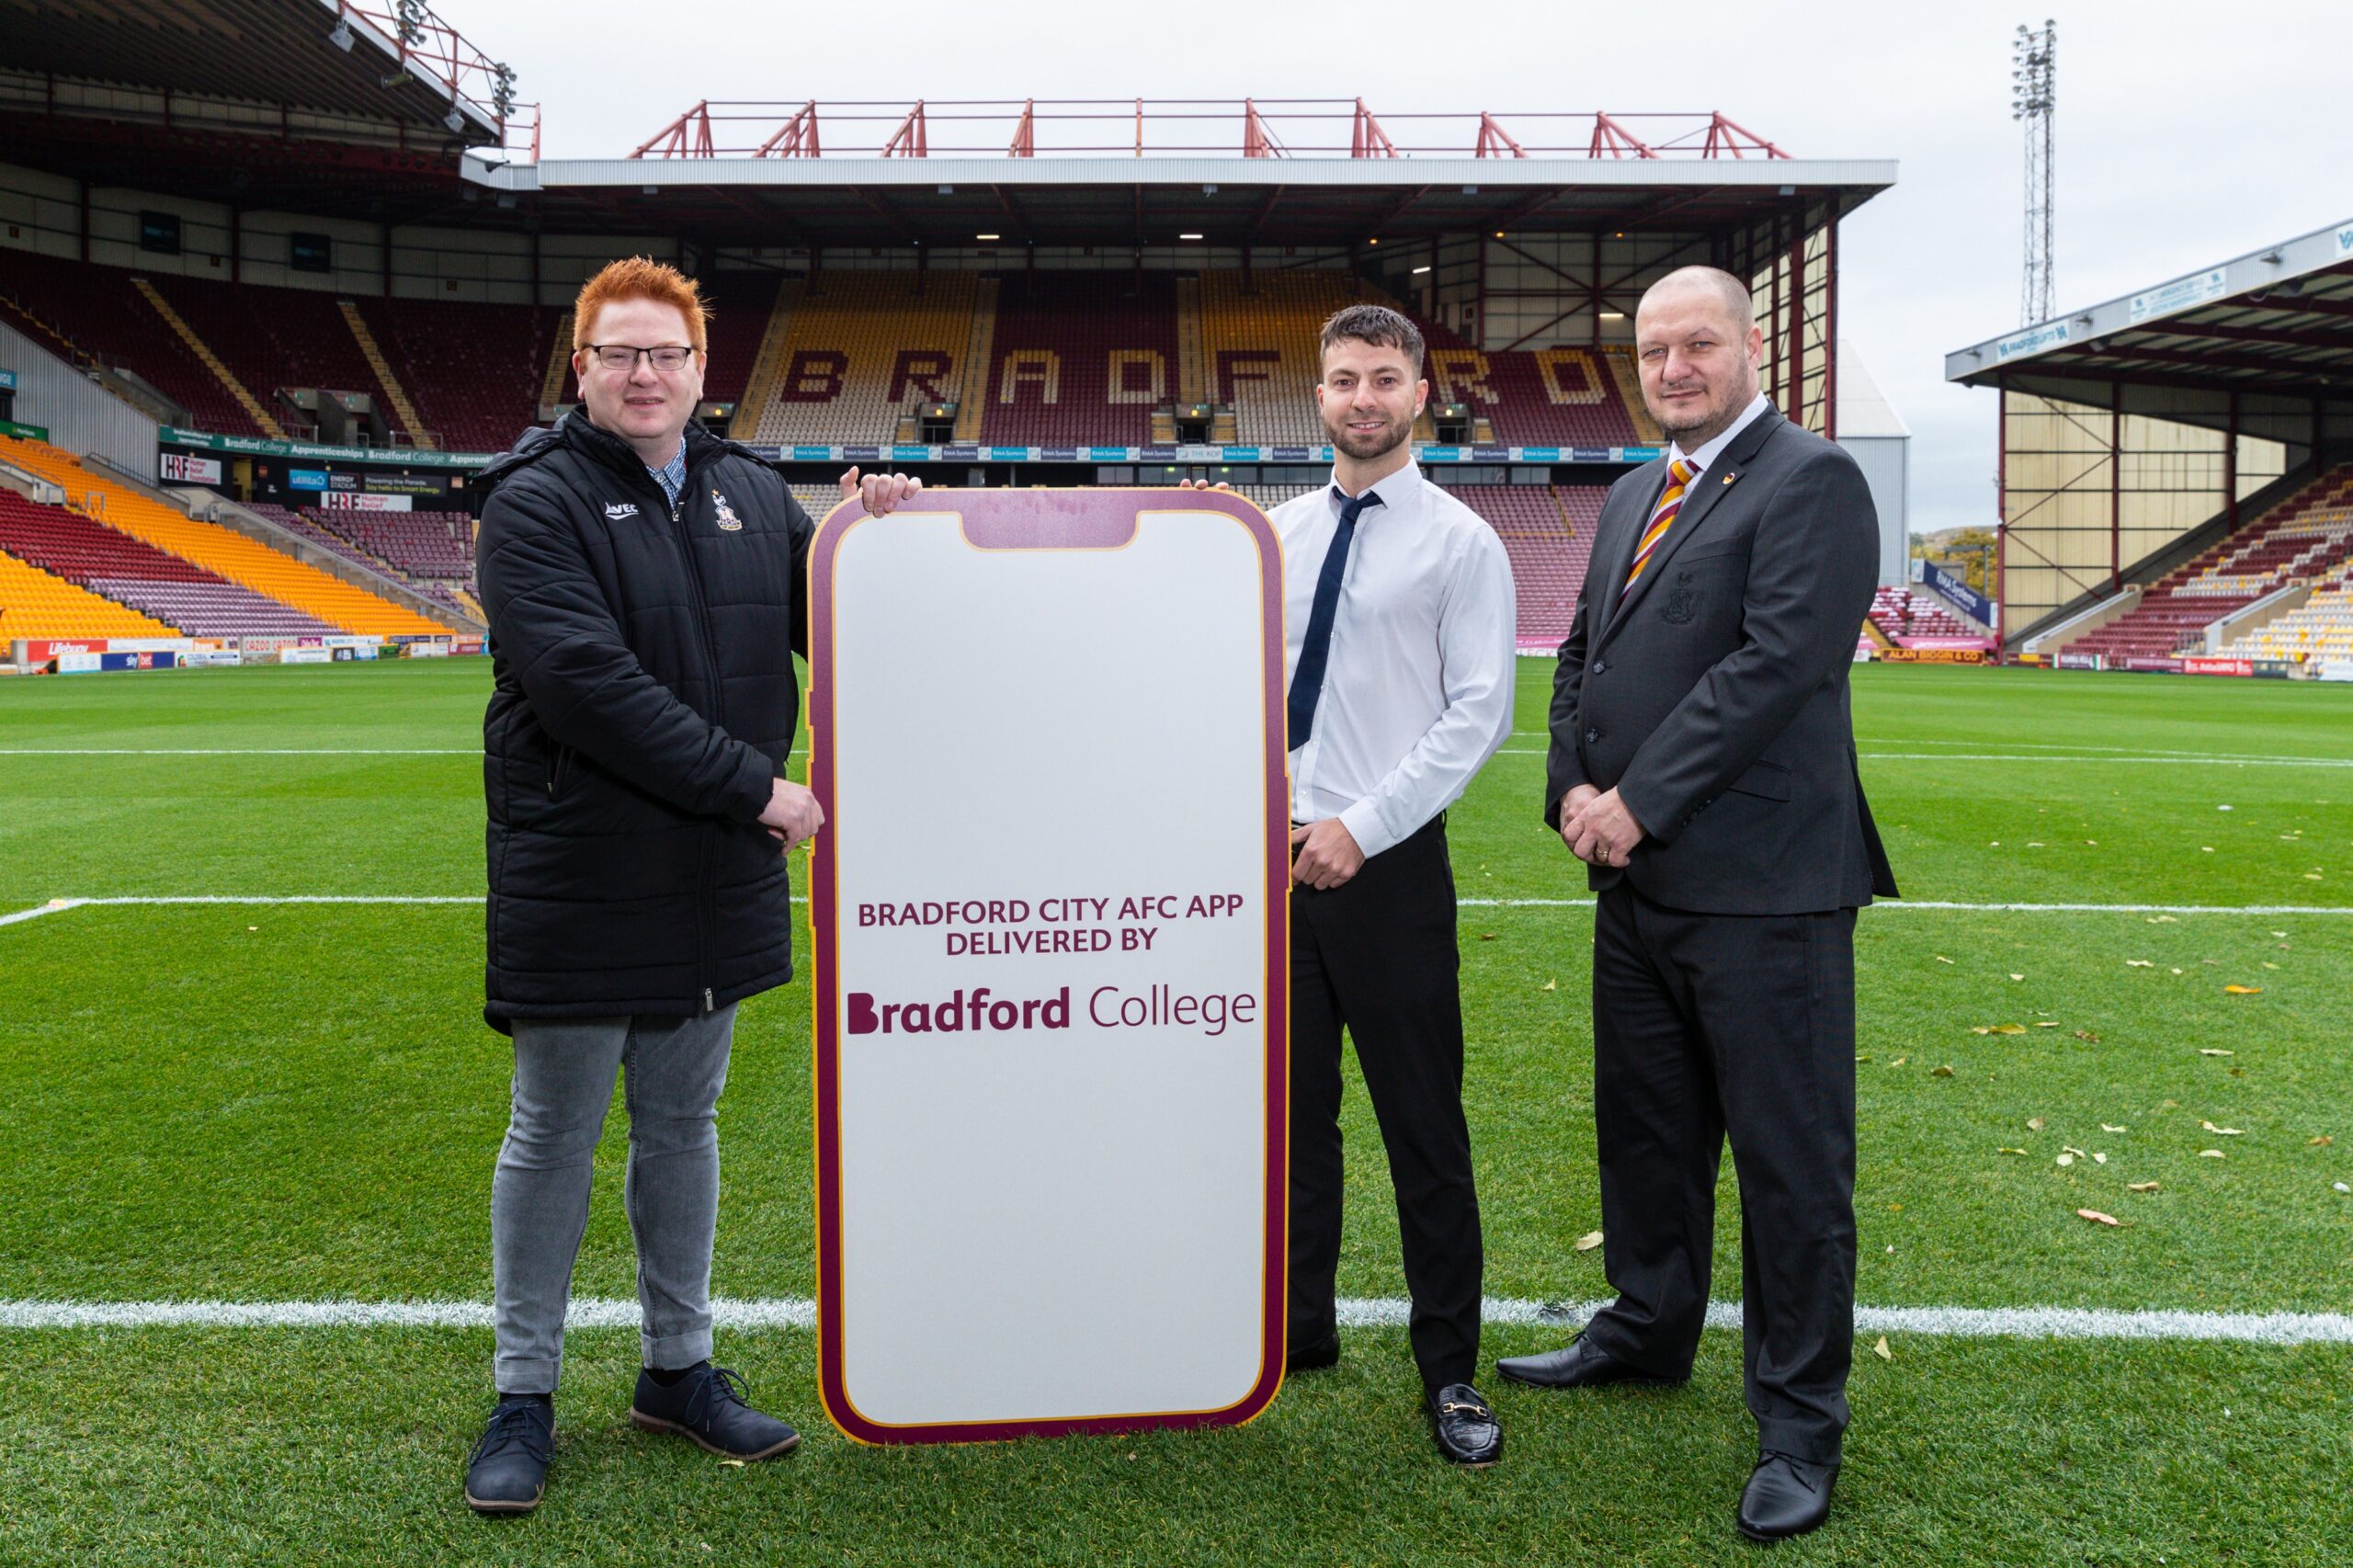 Bradford College delivers new Bradford City AFC App